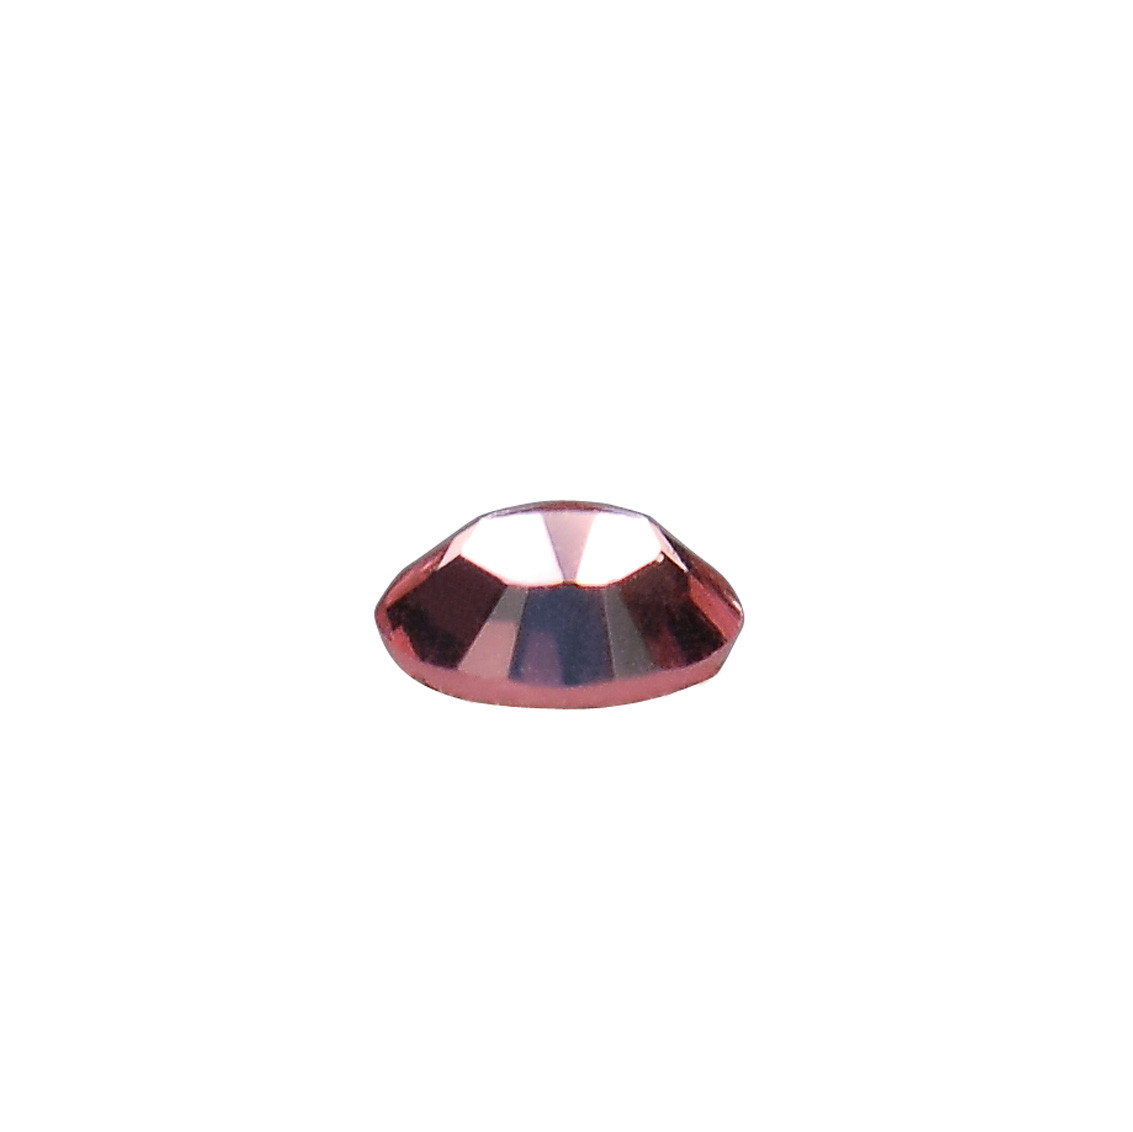 Swarovski® Crystals for Nail Art Light Rose size SS6 1440 pcs.